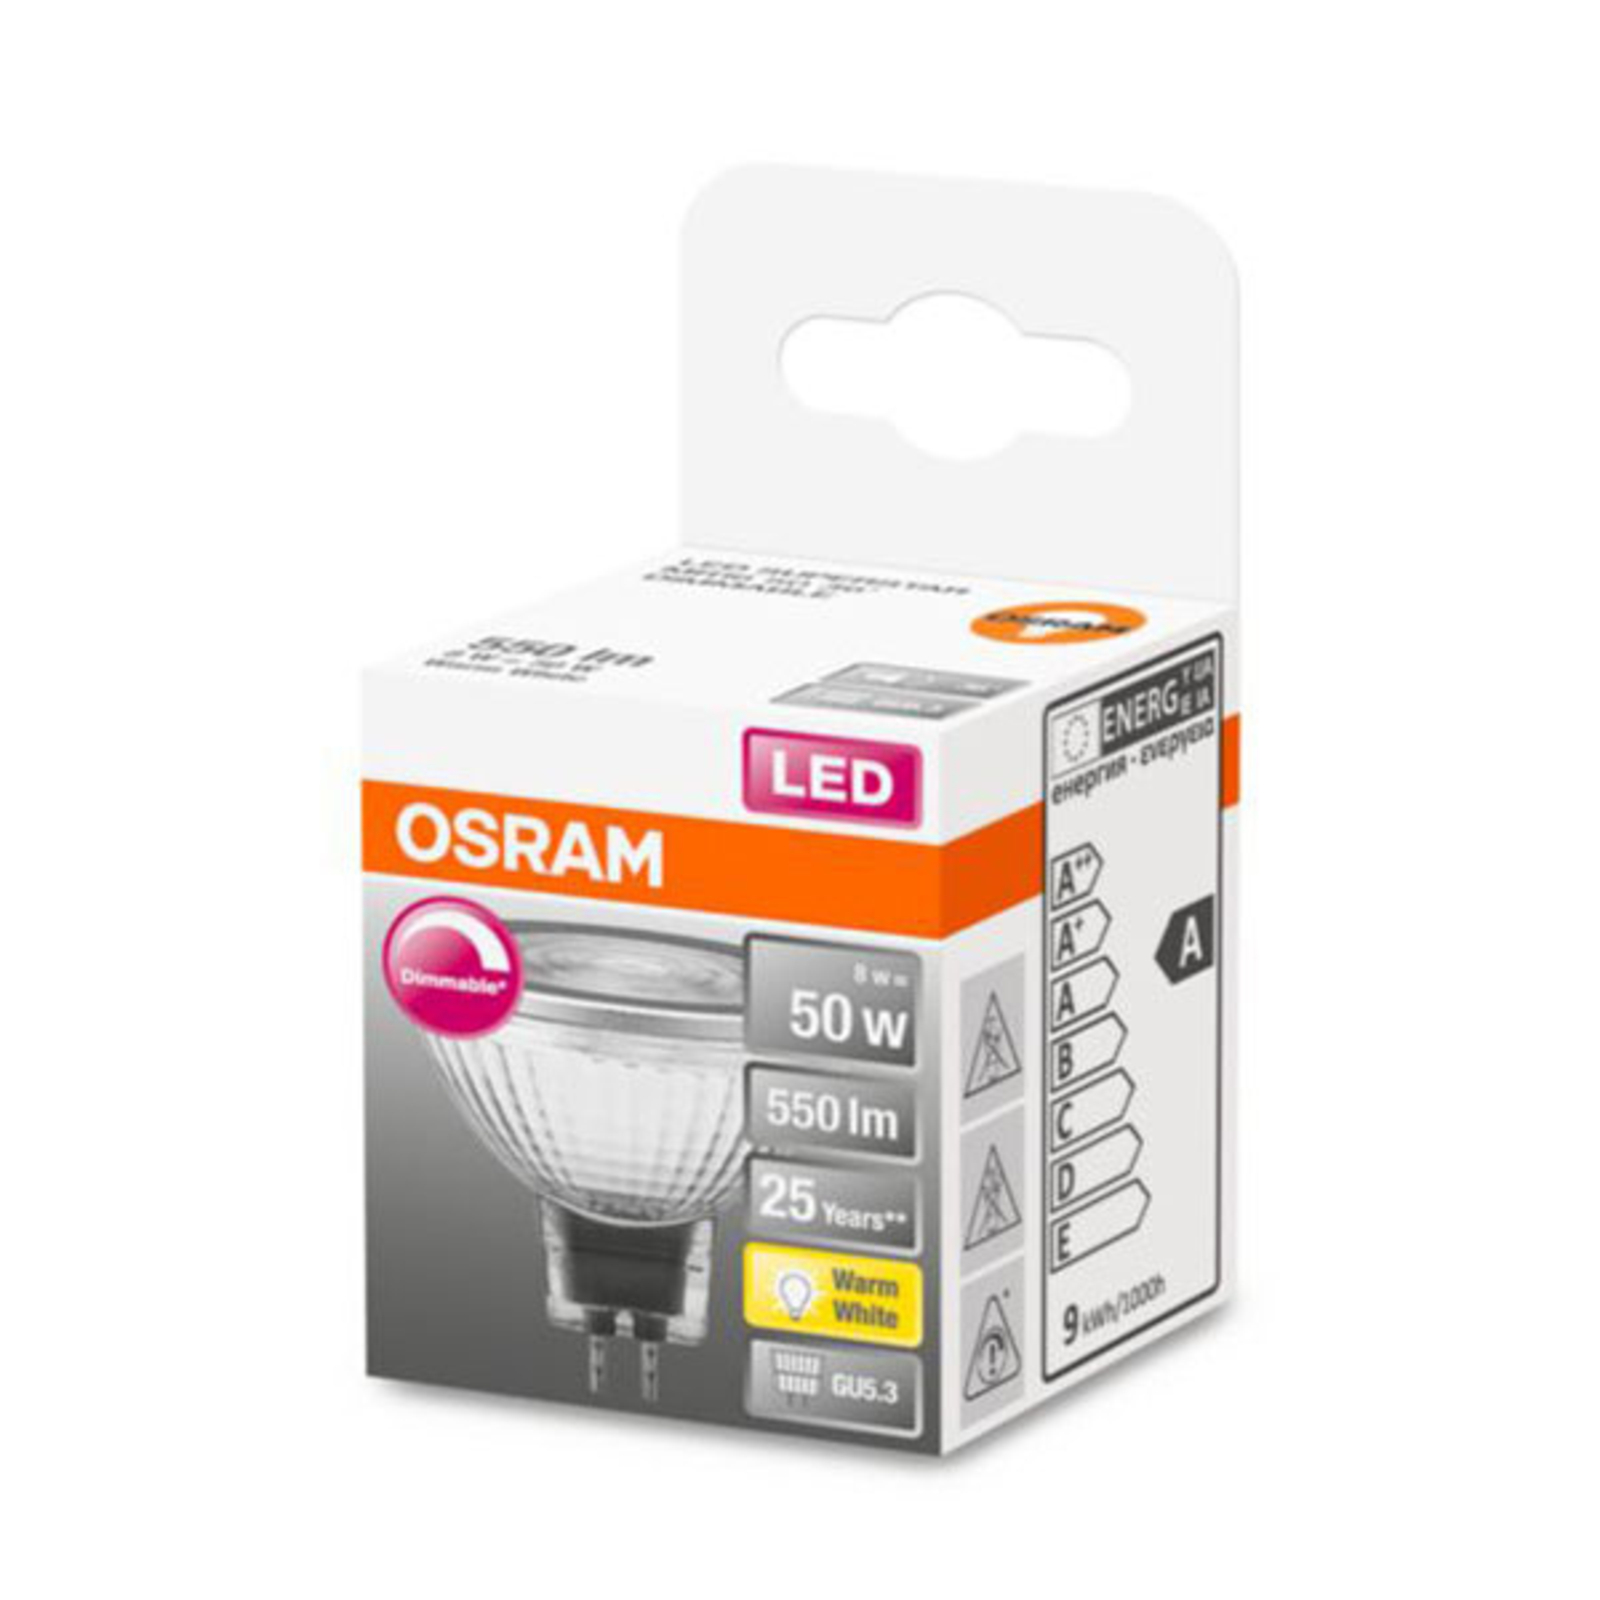 OSRAM LED 8W 927 36° dimbaar | Lampen24.nl